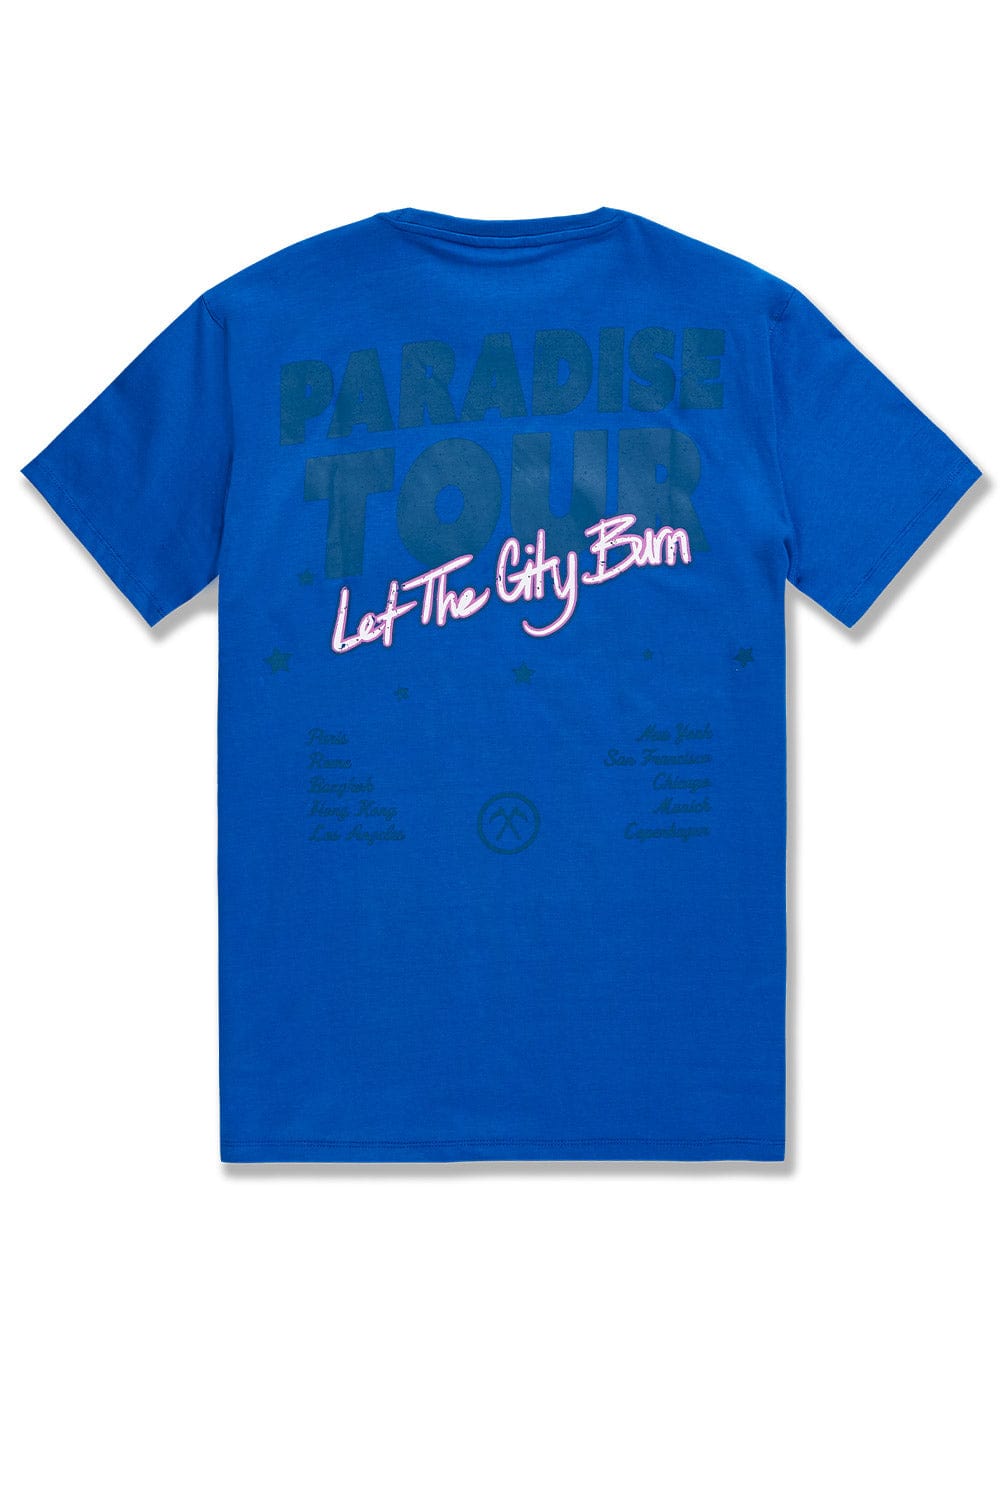 JC Big Men Big Men's Paradise Tour T-Shirt (Royal)